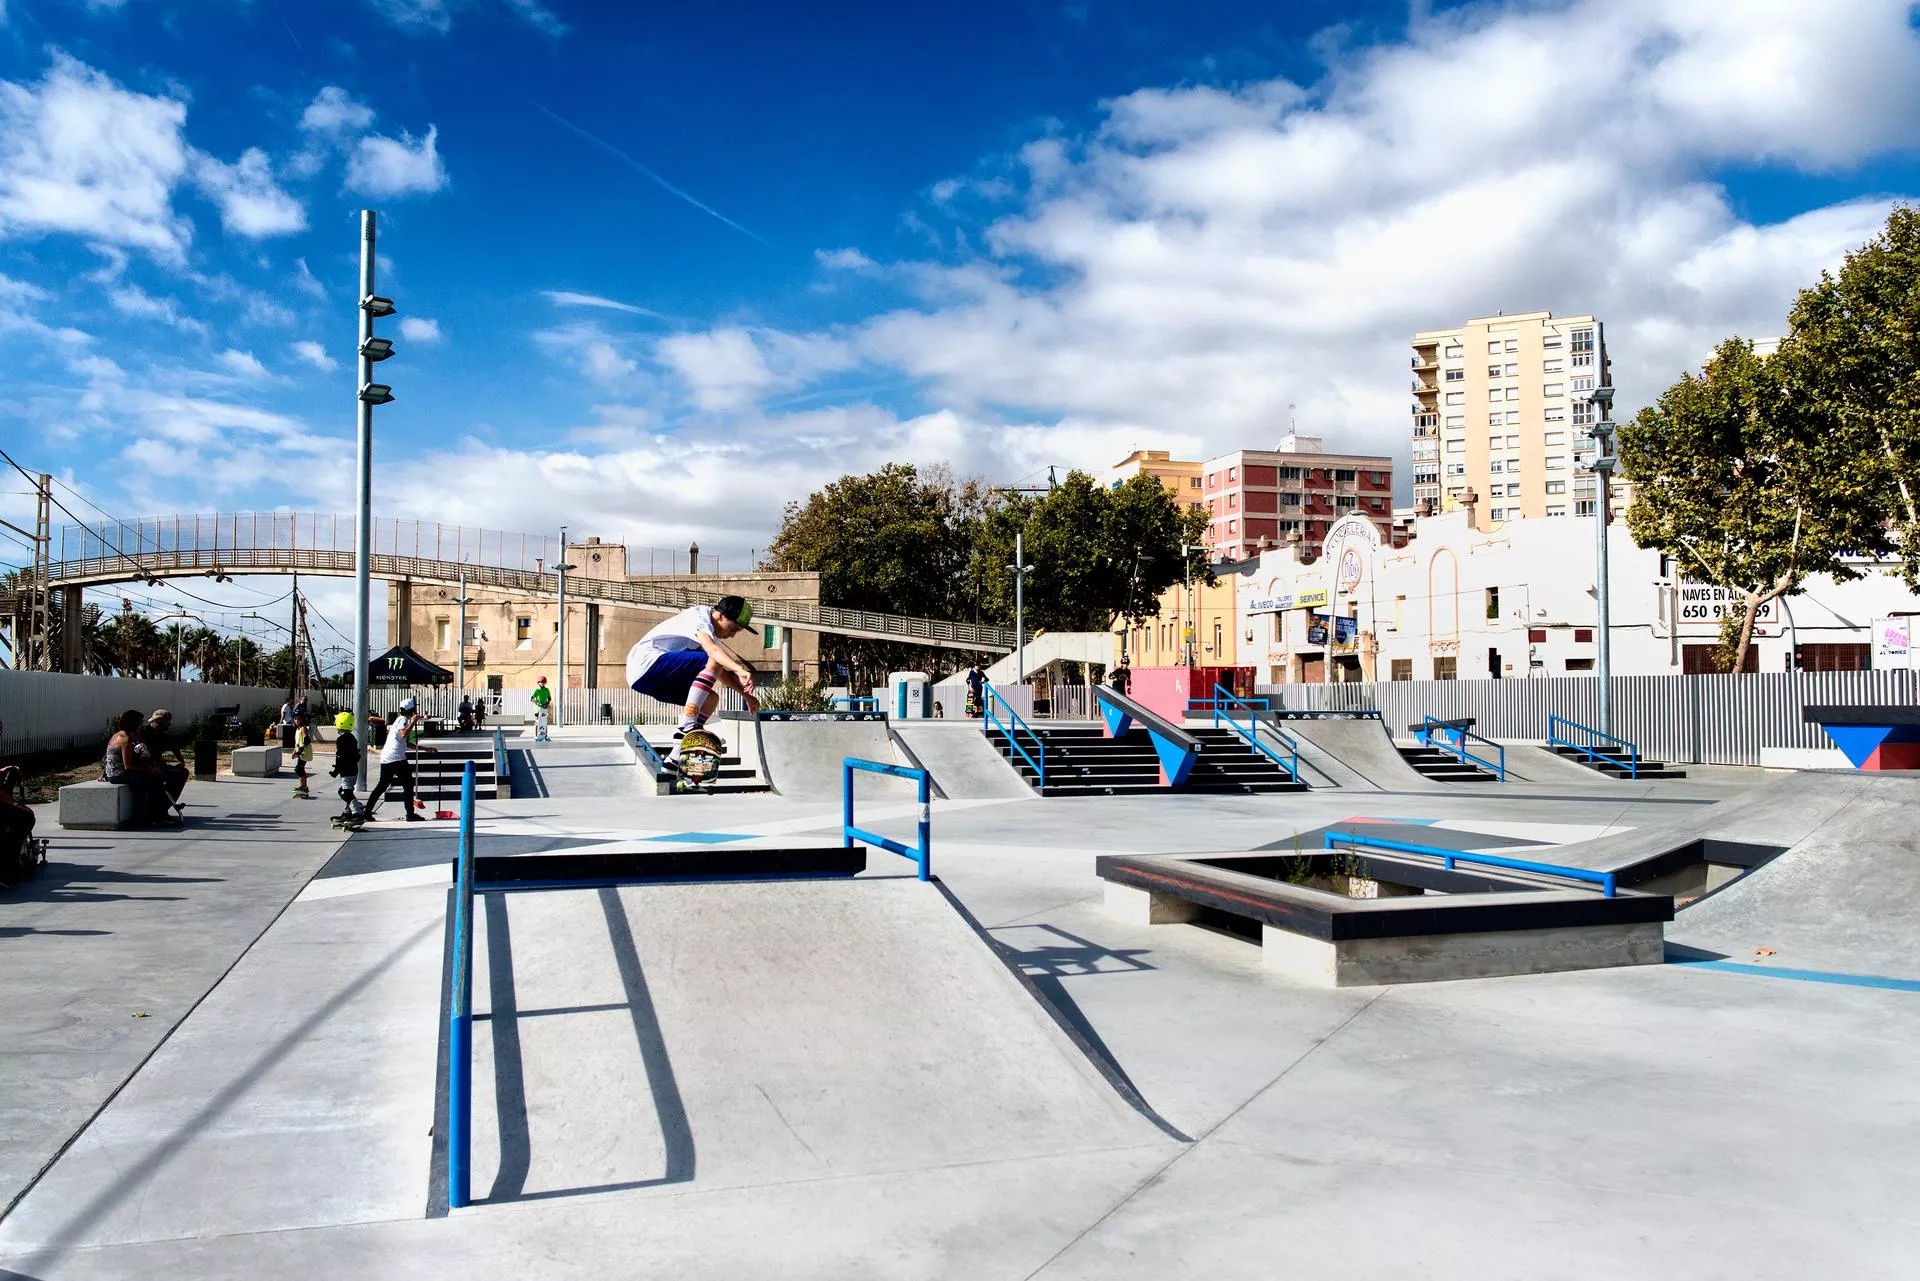 Skate Agora in Spain, Europe | Skateboarding - Rated 0.8